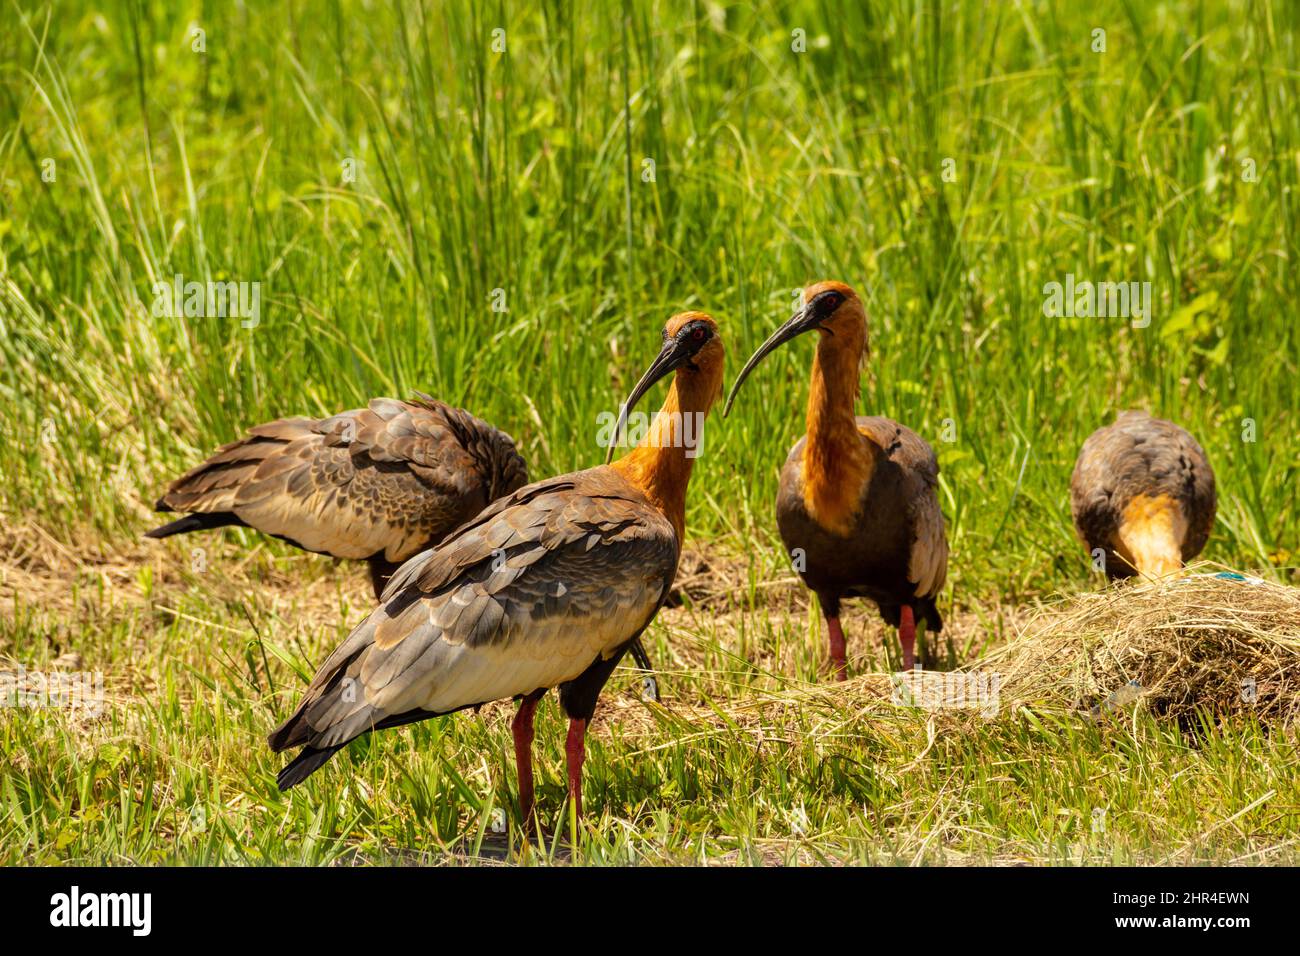 Goiânia, Goias, Brazil – February 24, 2022: heristicus caudatus. Four birds in the middle of the grass feeding. Stock Photo